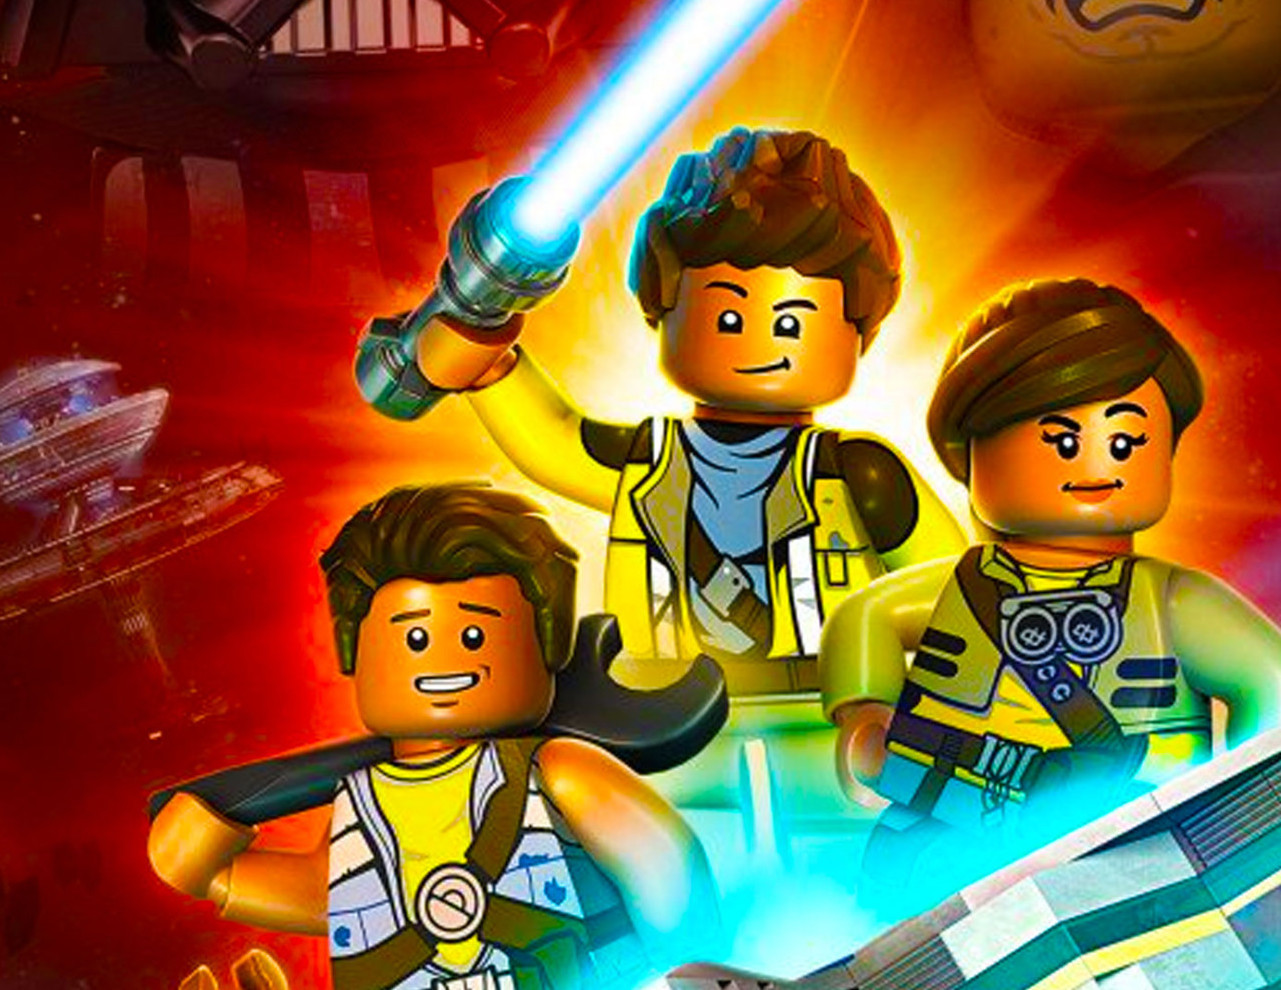 Lego Star Wars Freemaker Adventures Review